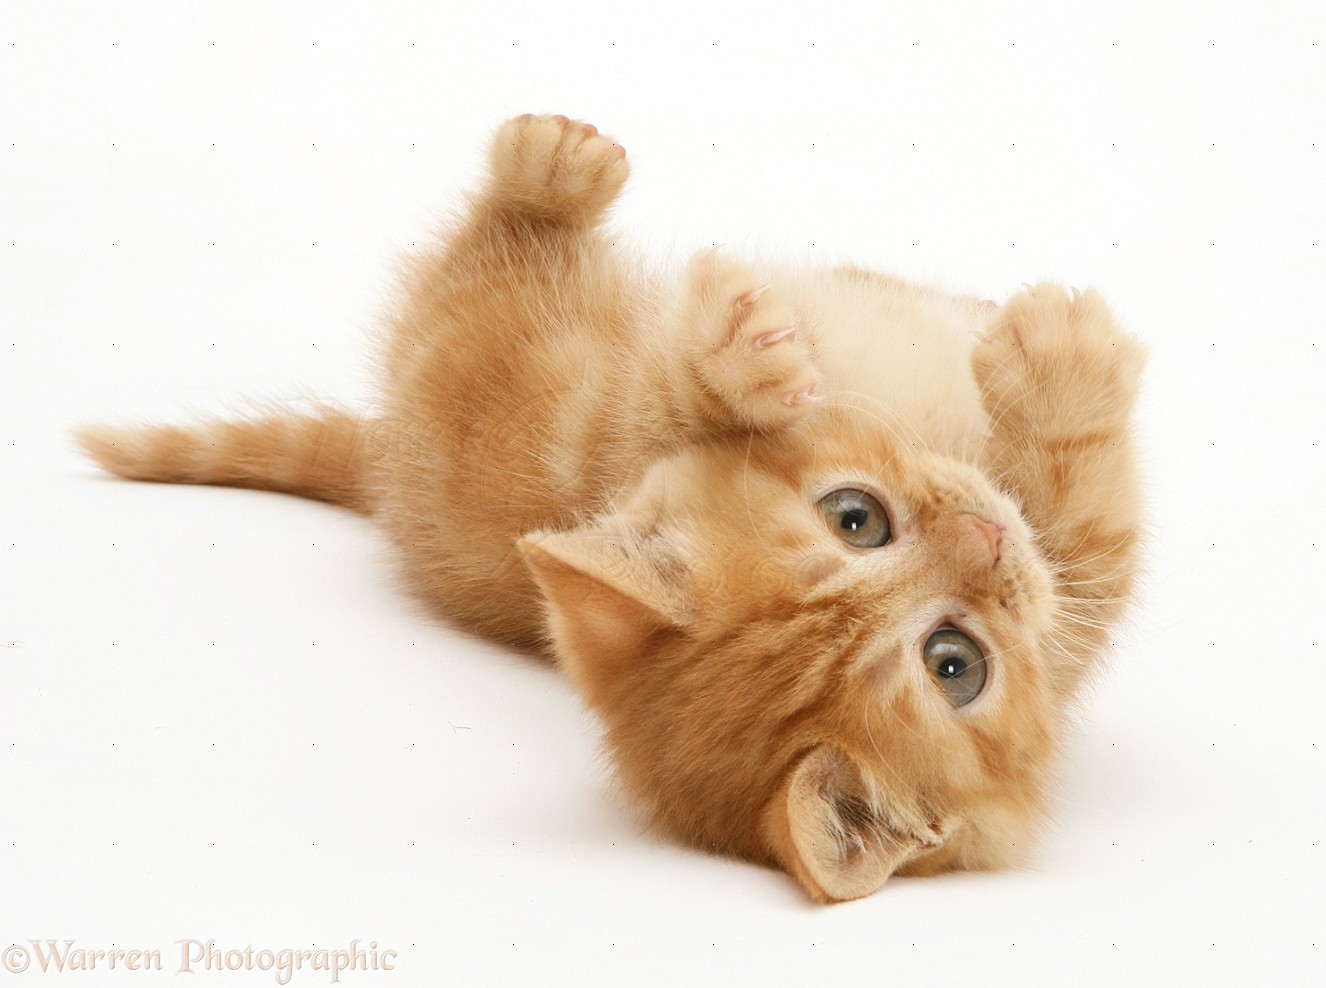 Wp20283 British Shorthair Red Tabby Kitten Rolling Playfully